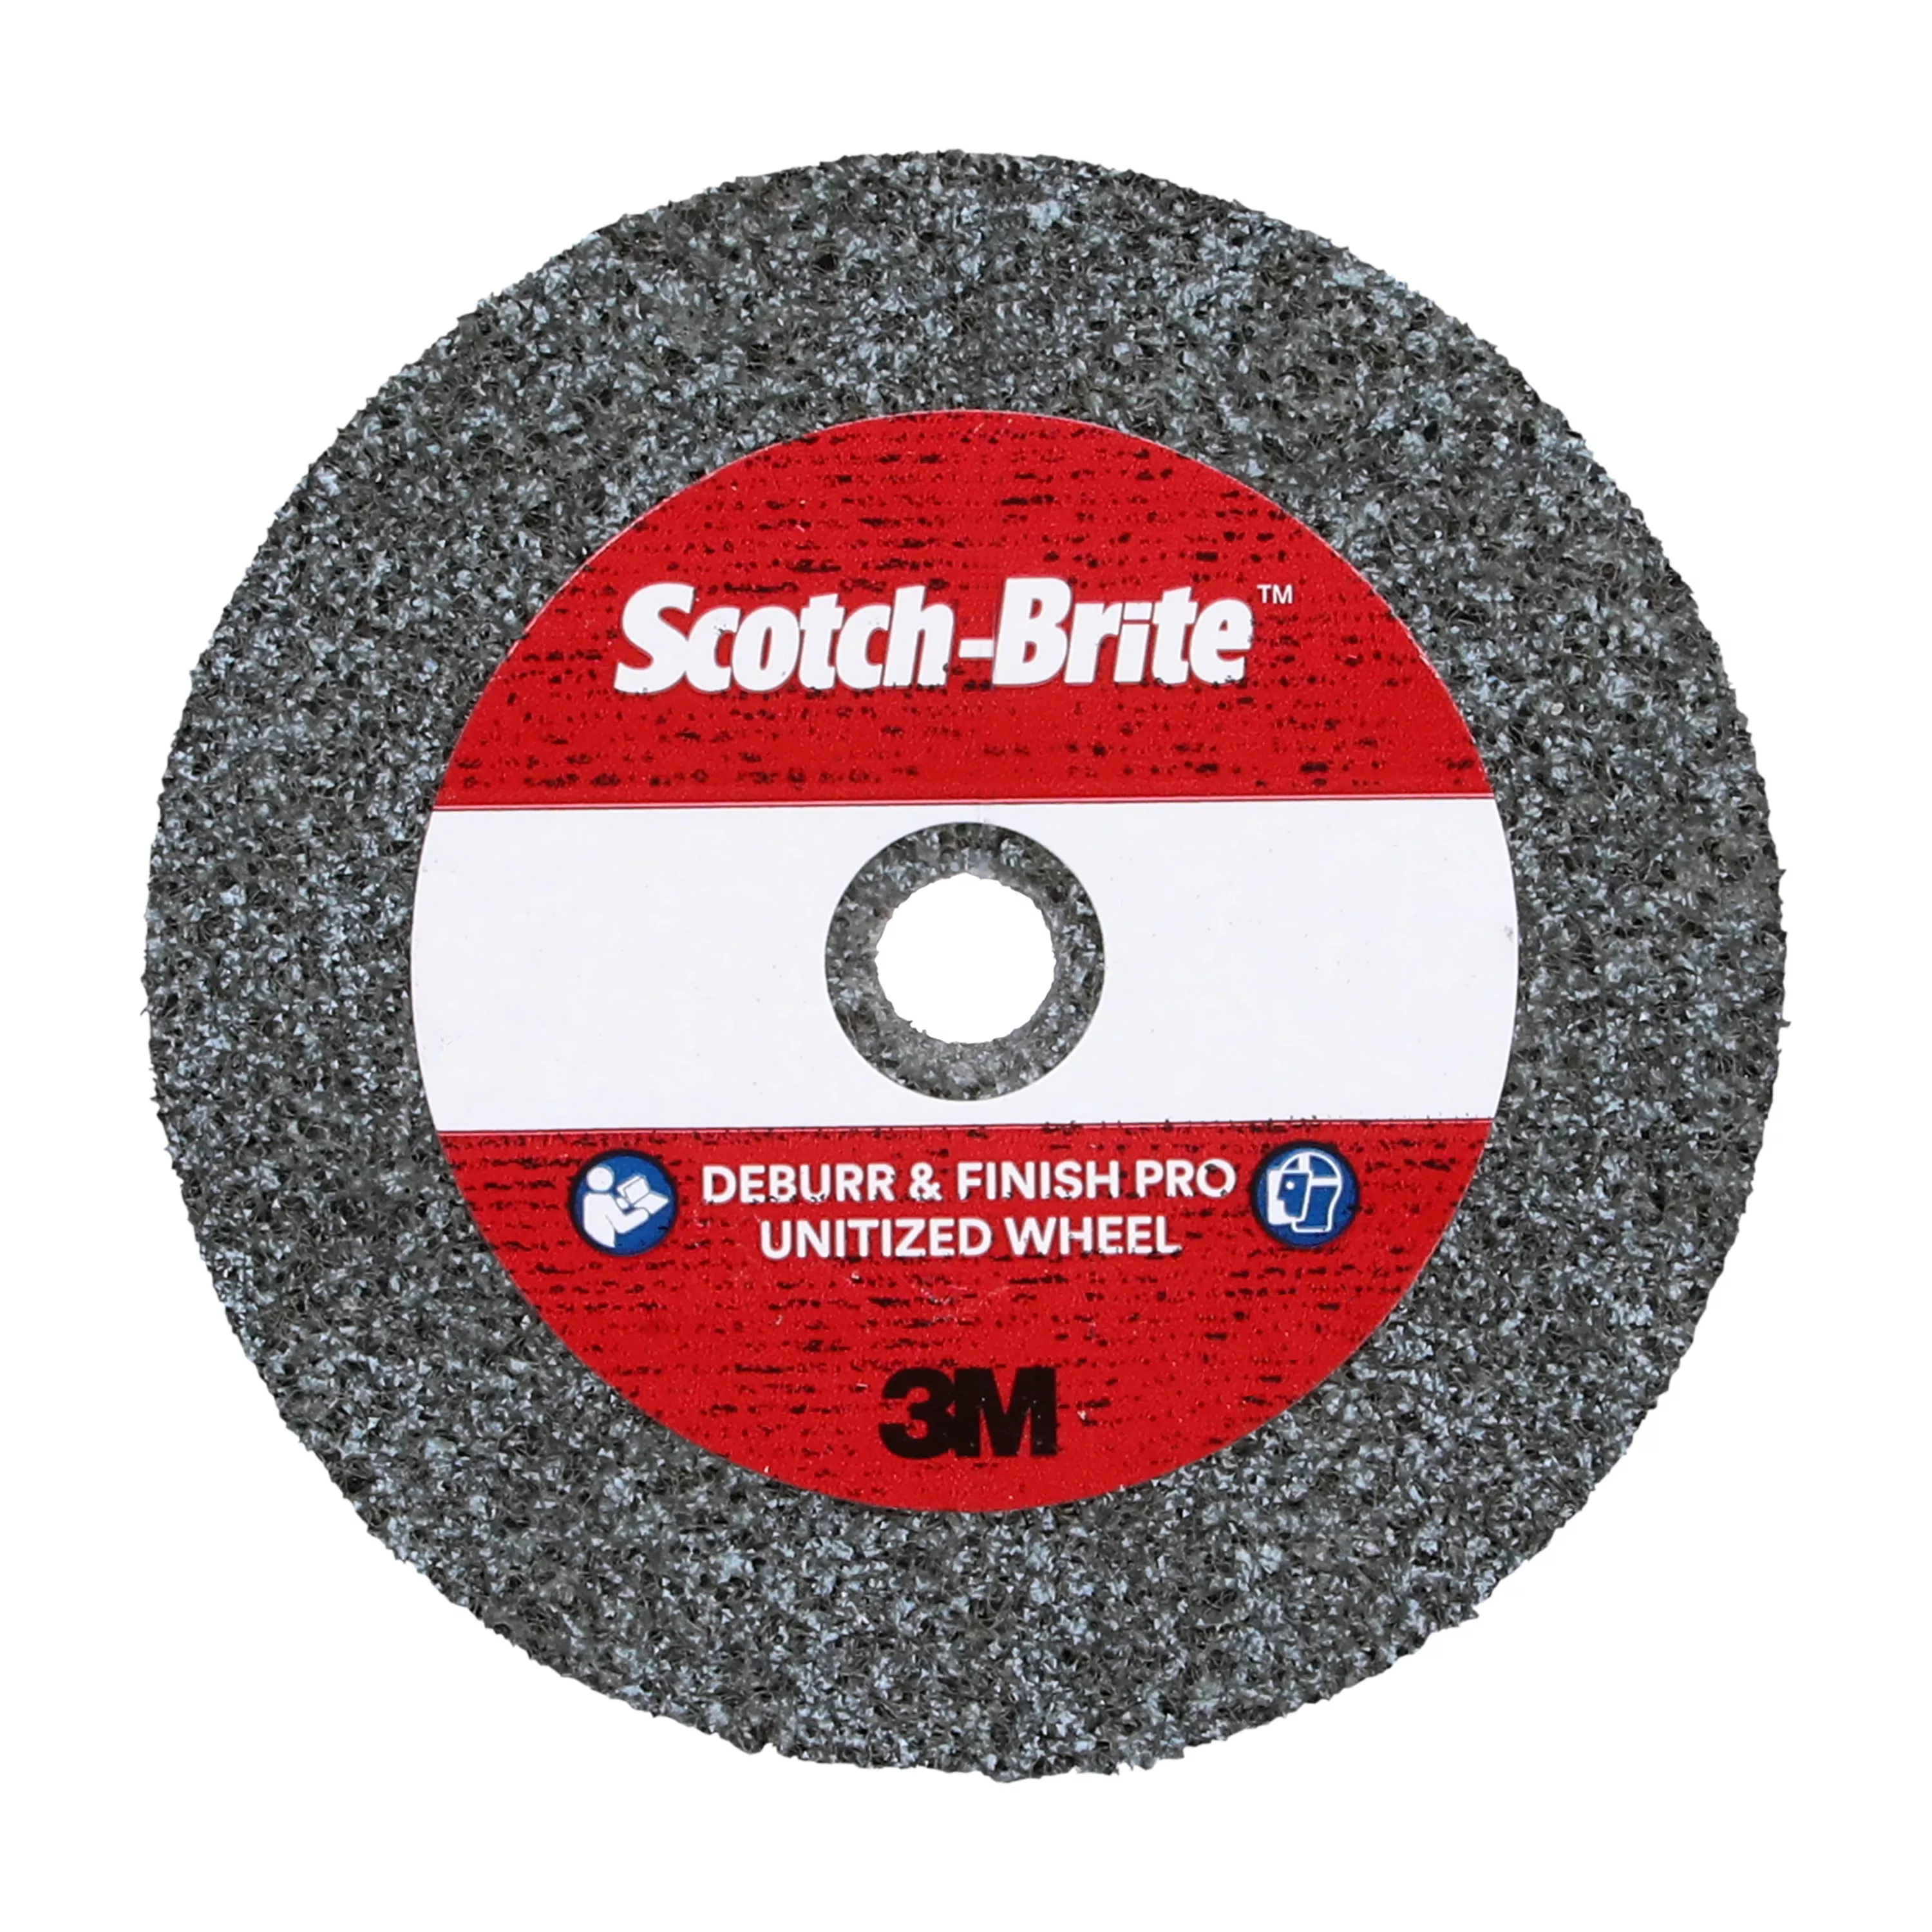 SKU 7100220898 | Scotch-Brite™ Deburr & Finish Pro Unitized Wheel